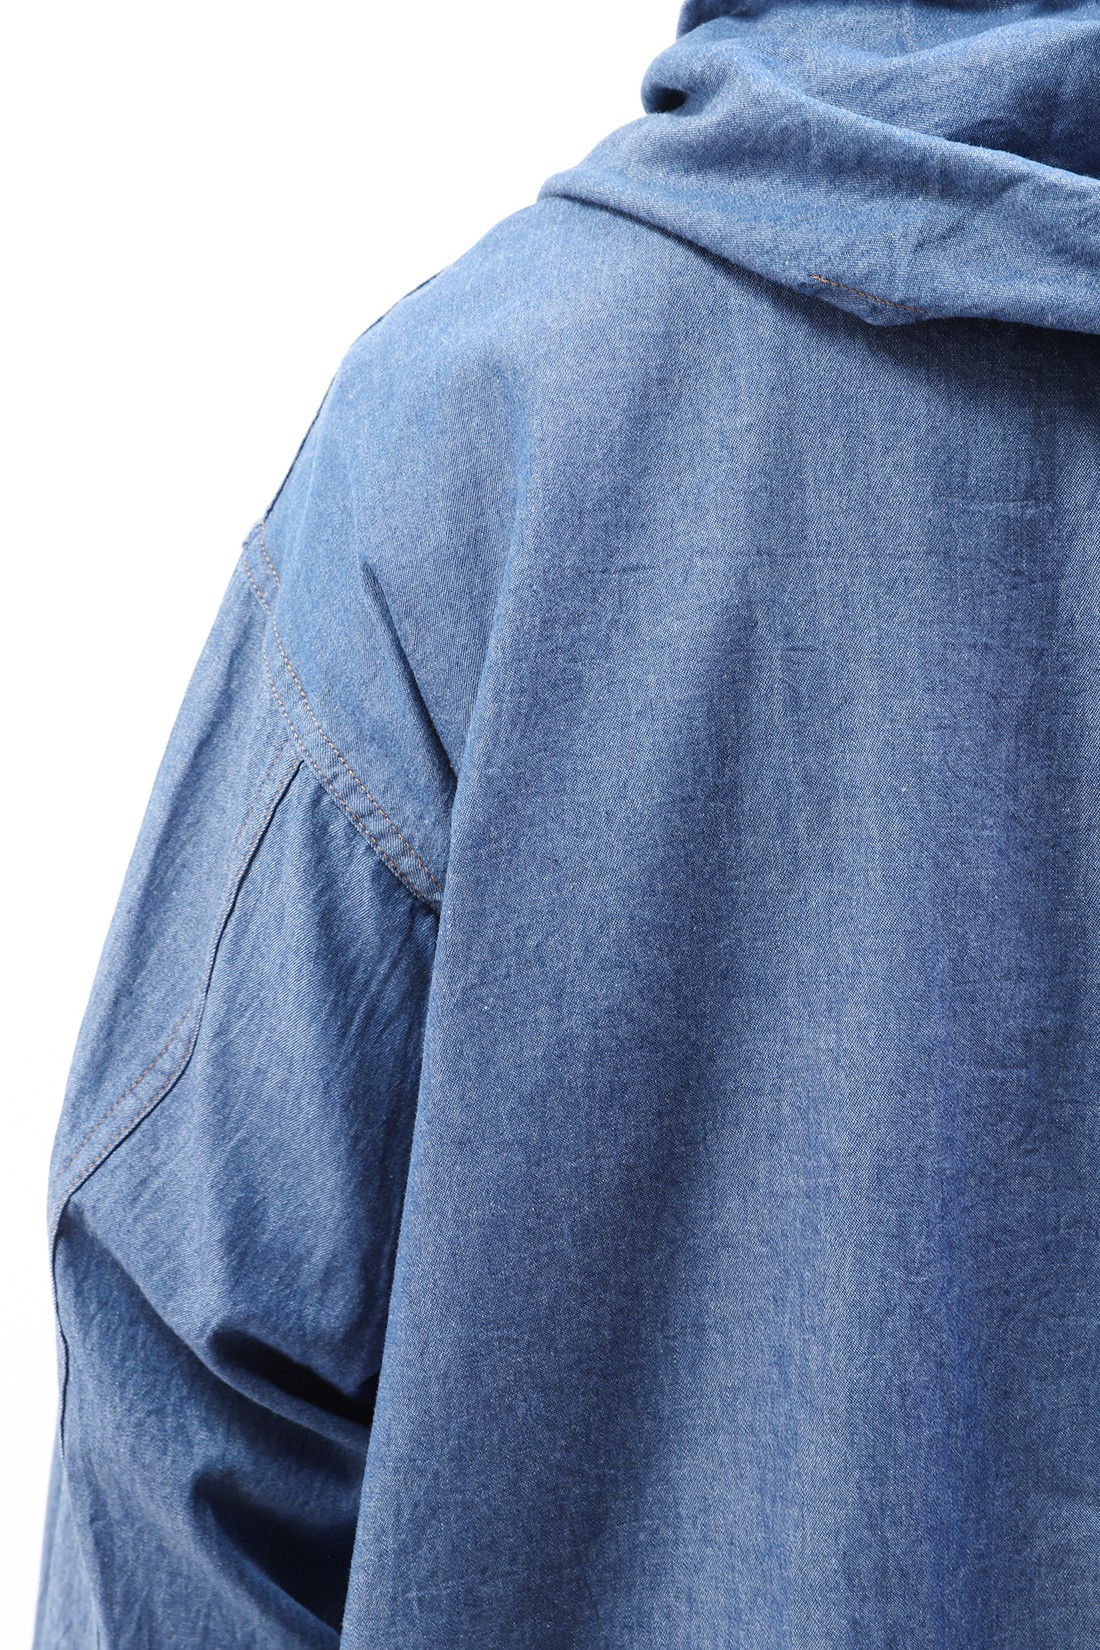 ENGINEERED GARMENTS / Cagoule shirt blue denim Shirting